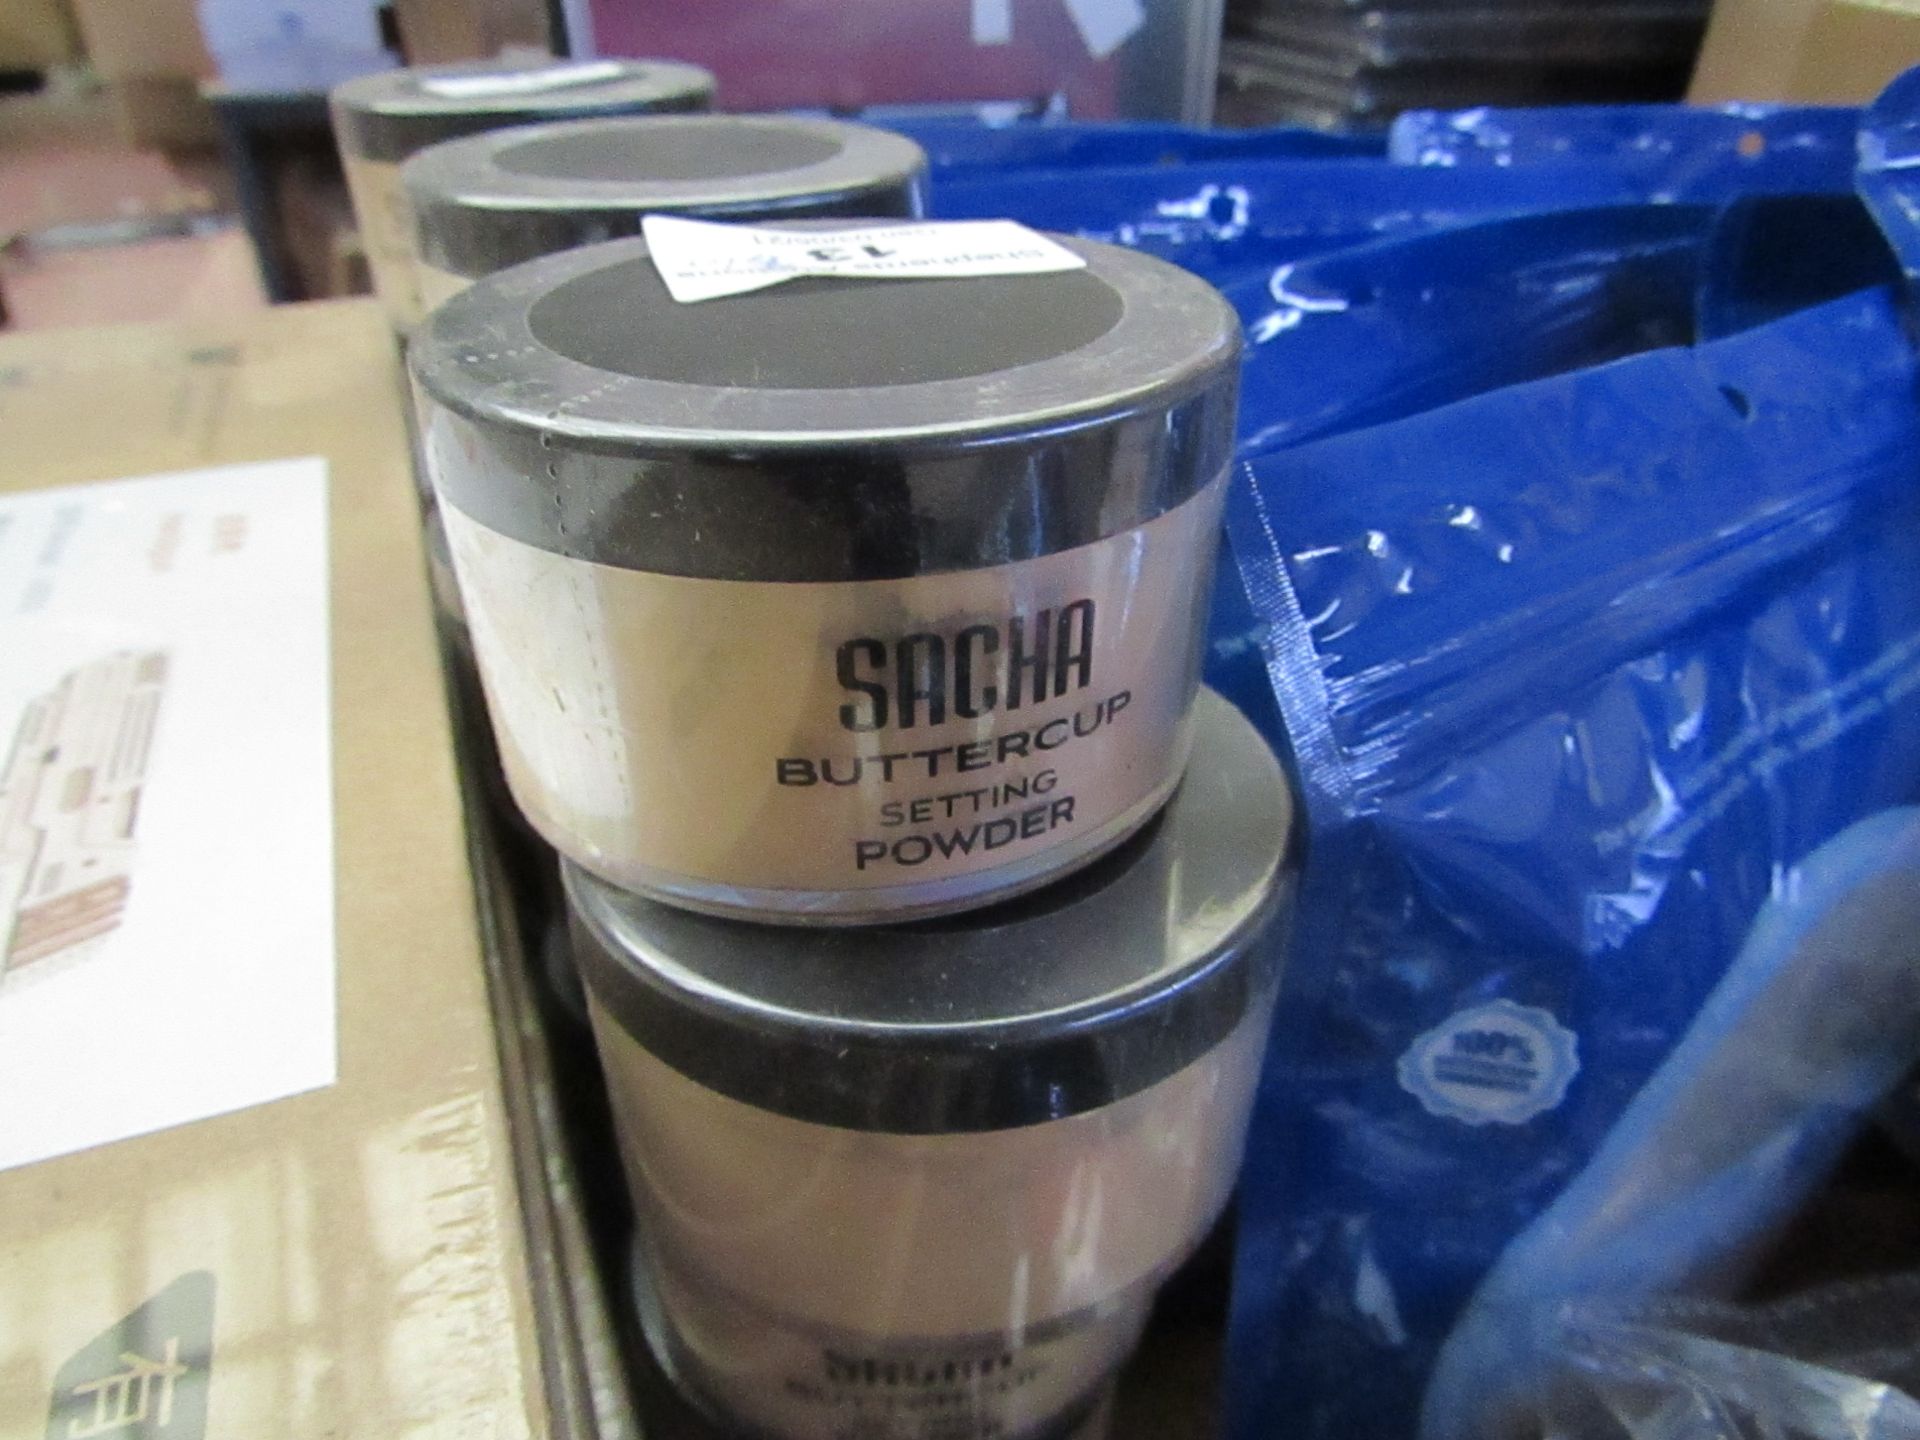 9 x 35g per pot of Sacha Buttercup Setting Powder new & sealed